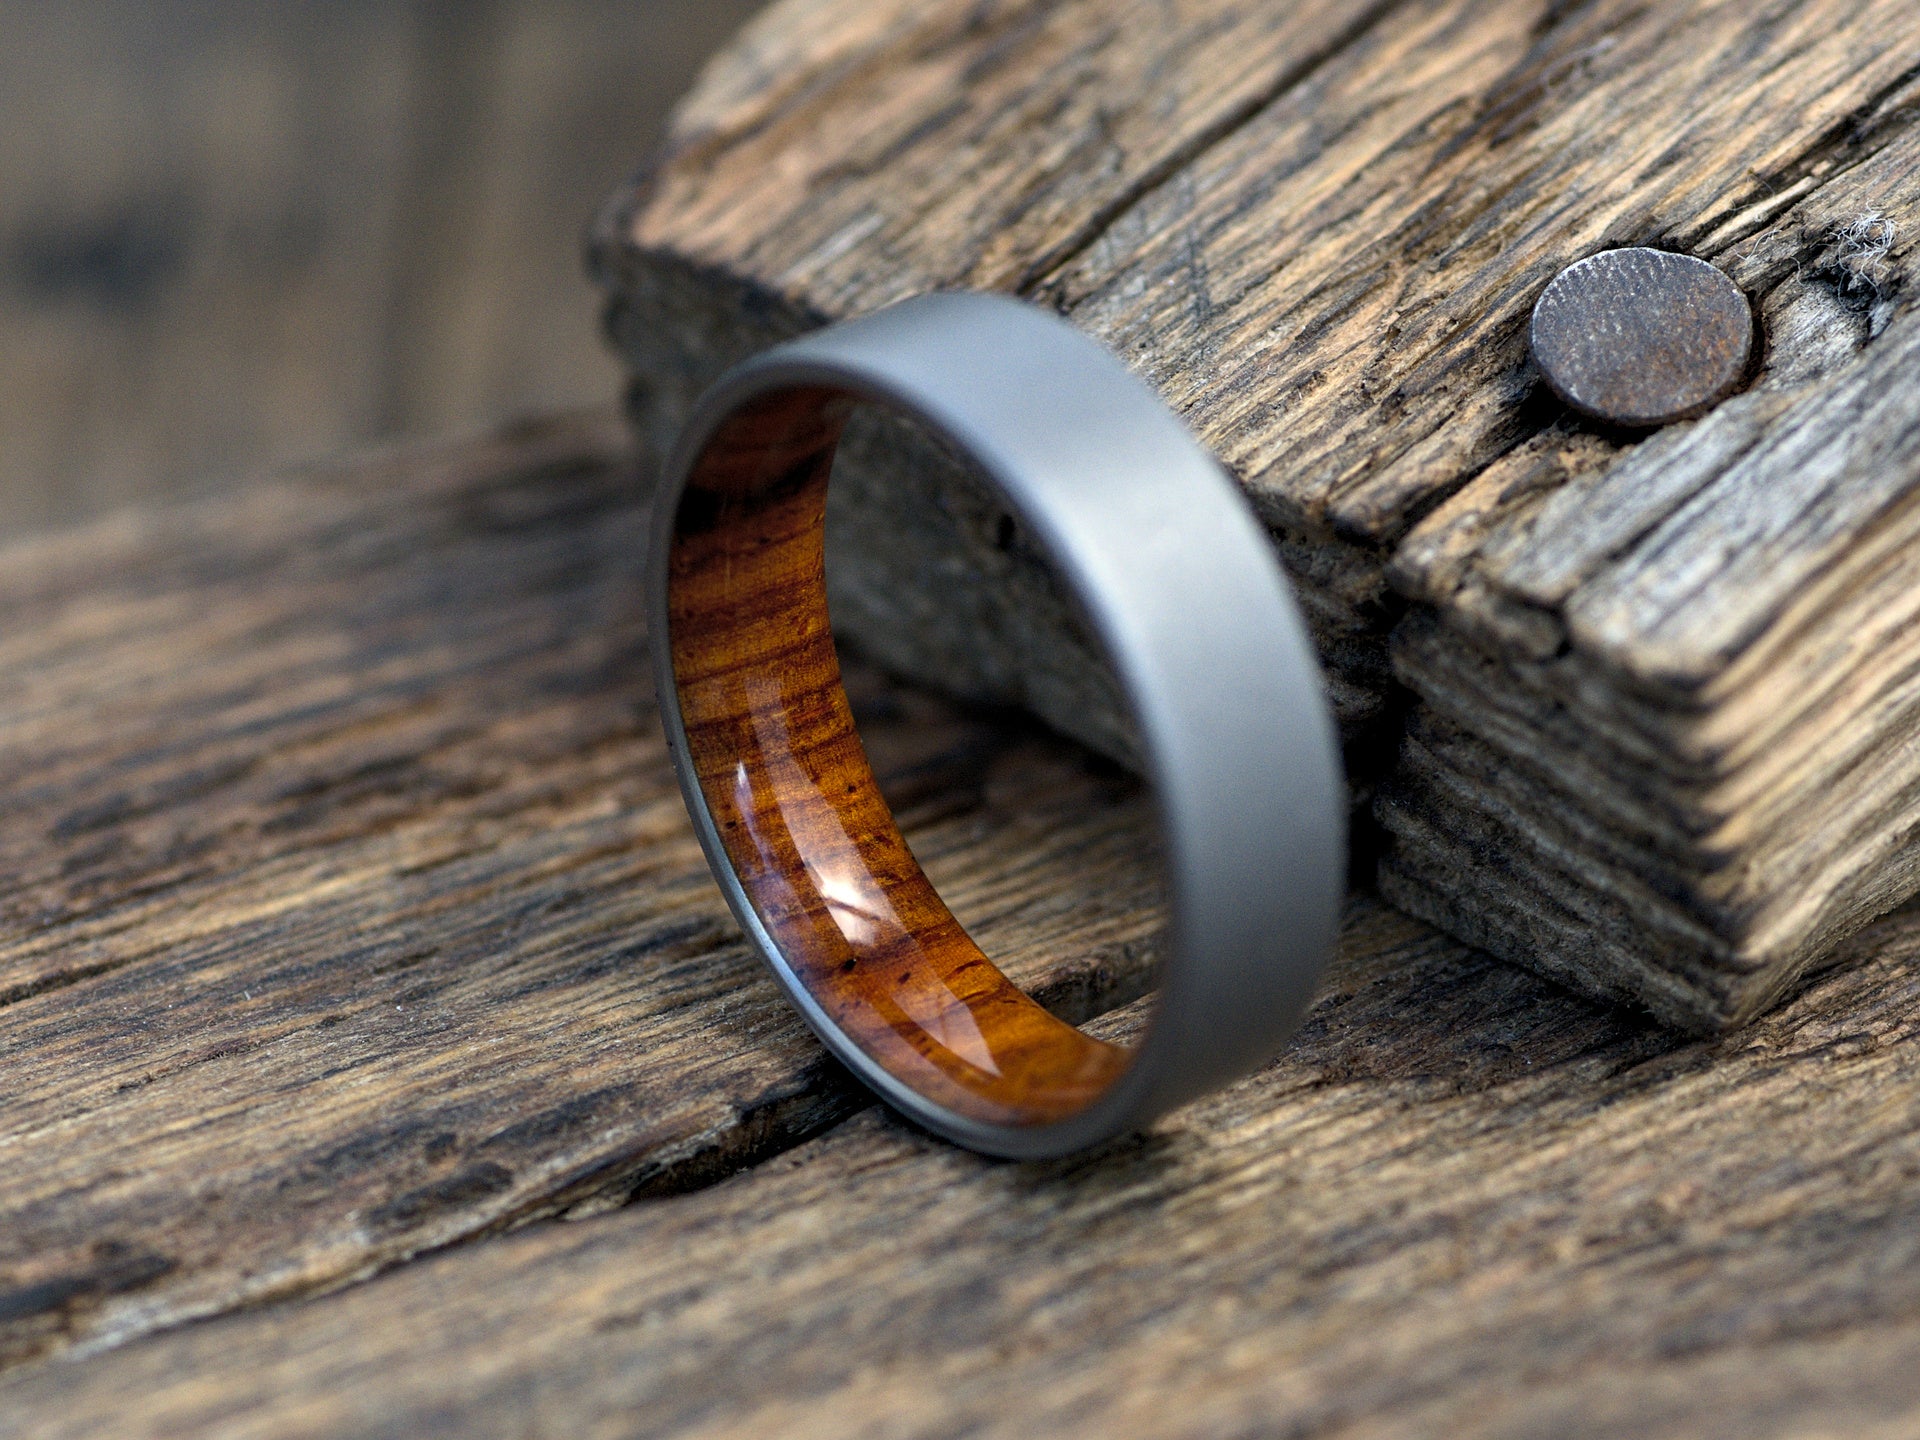 Men's Wood and Metal Ring | Titanium and Teak Wood Wedding Band